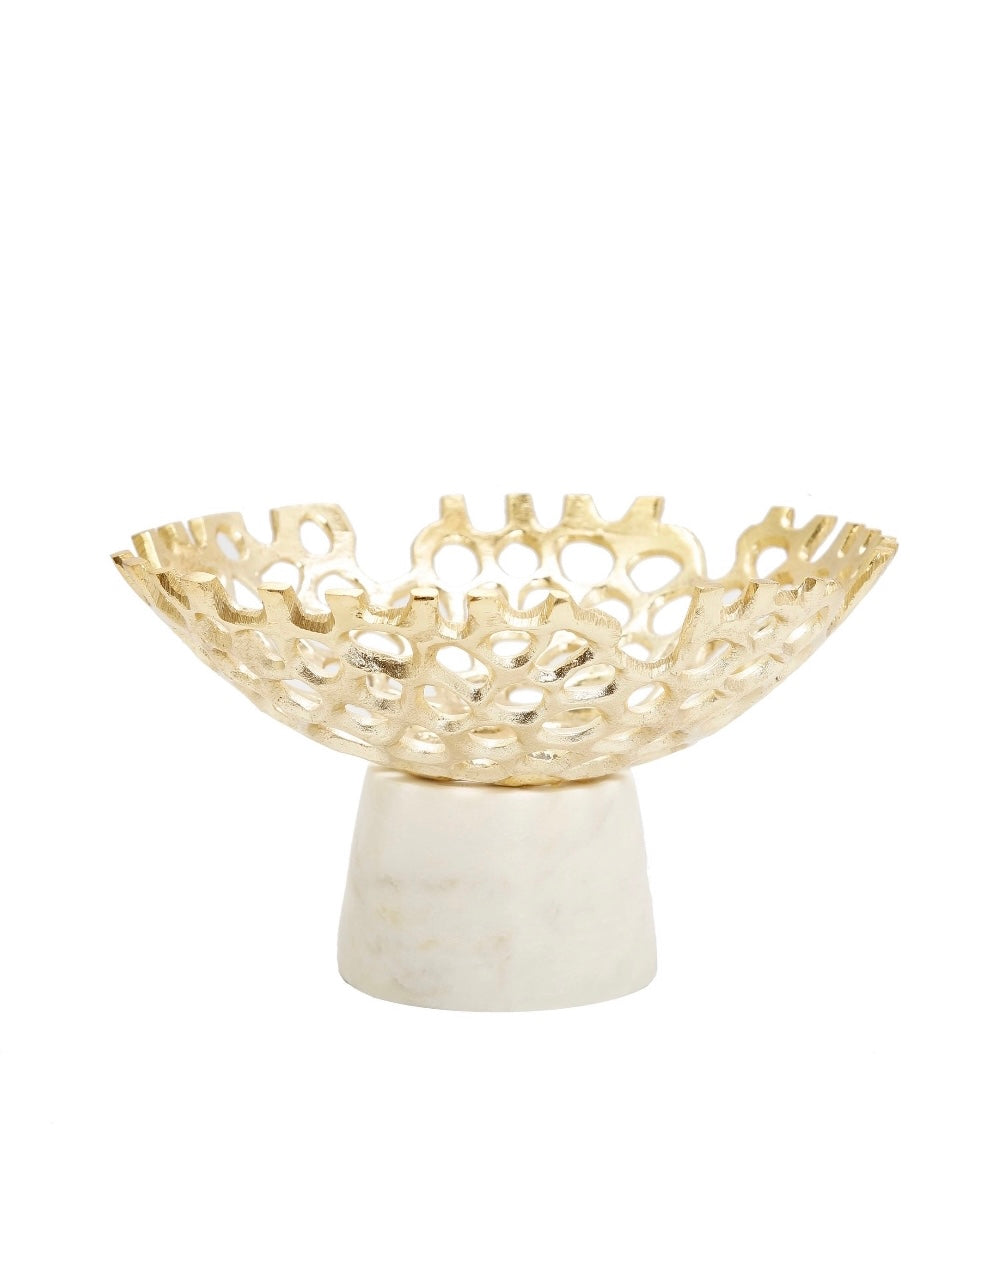 Gold Web Design Bowl on White Marble Base 9.5